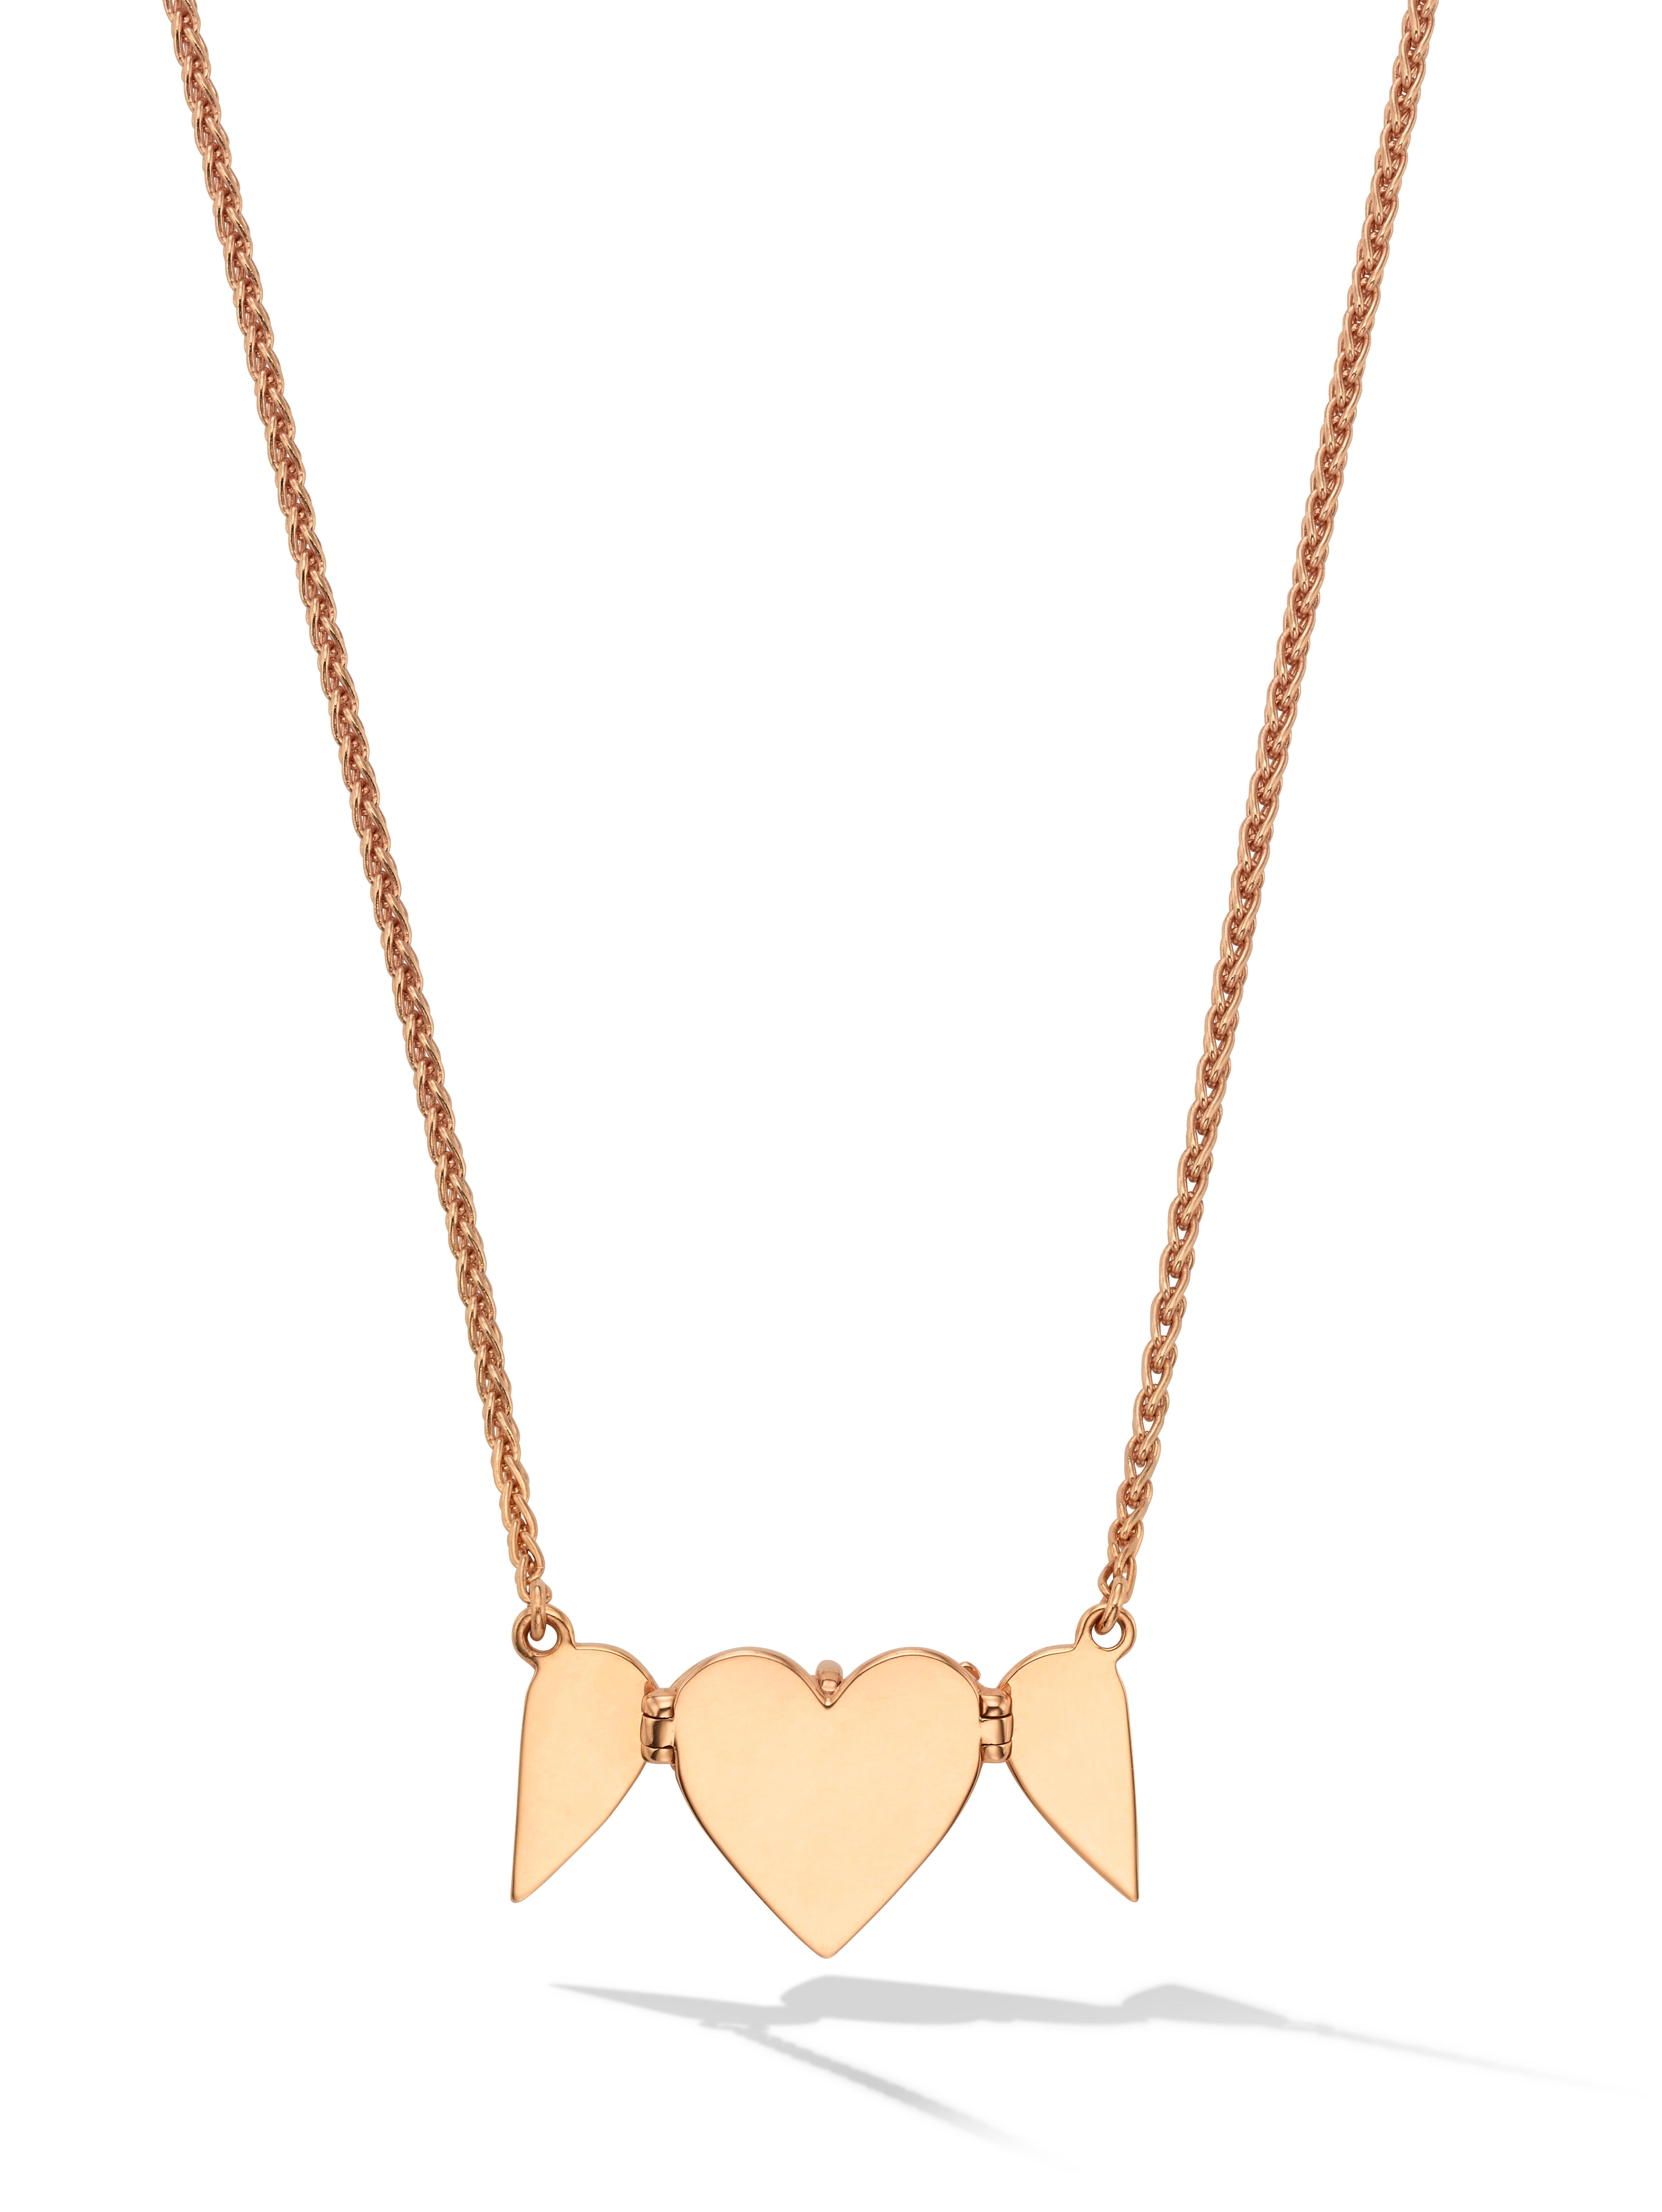 Contemporary Cadar Endless Necklace, 3 Hearts, 18 Karat Rose Gold